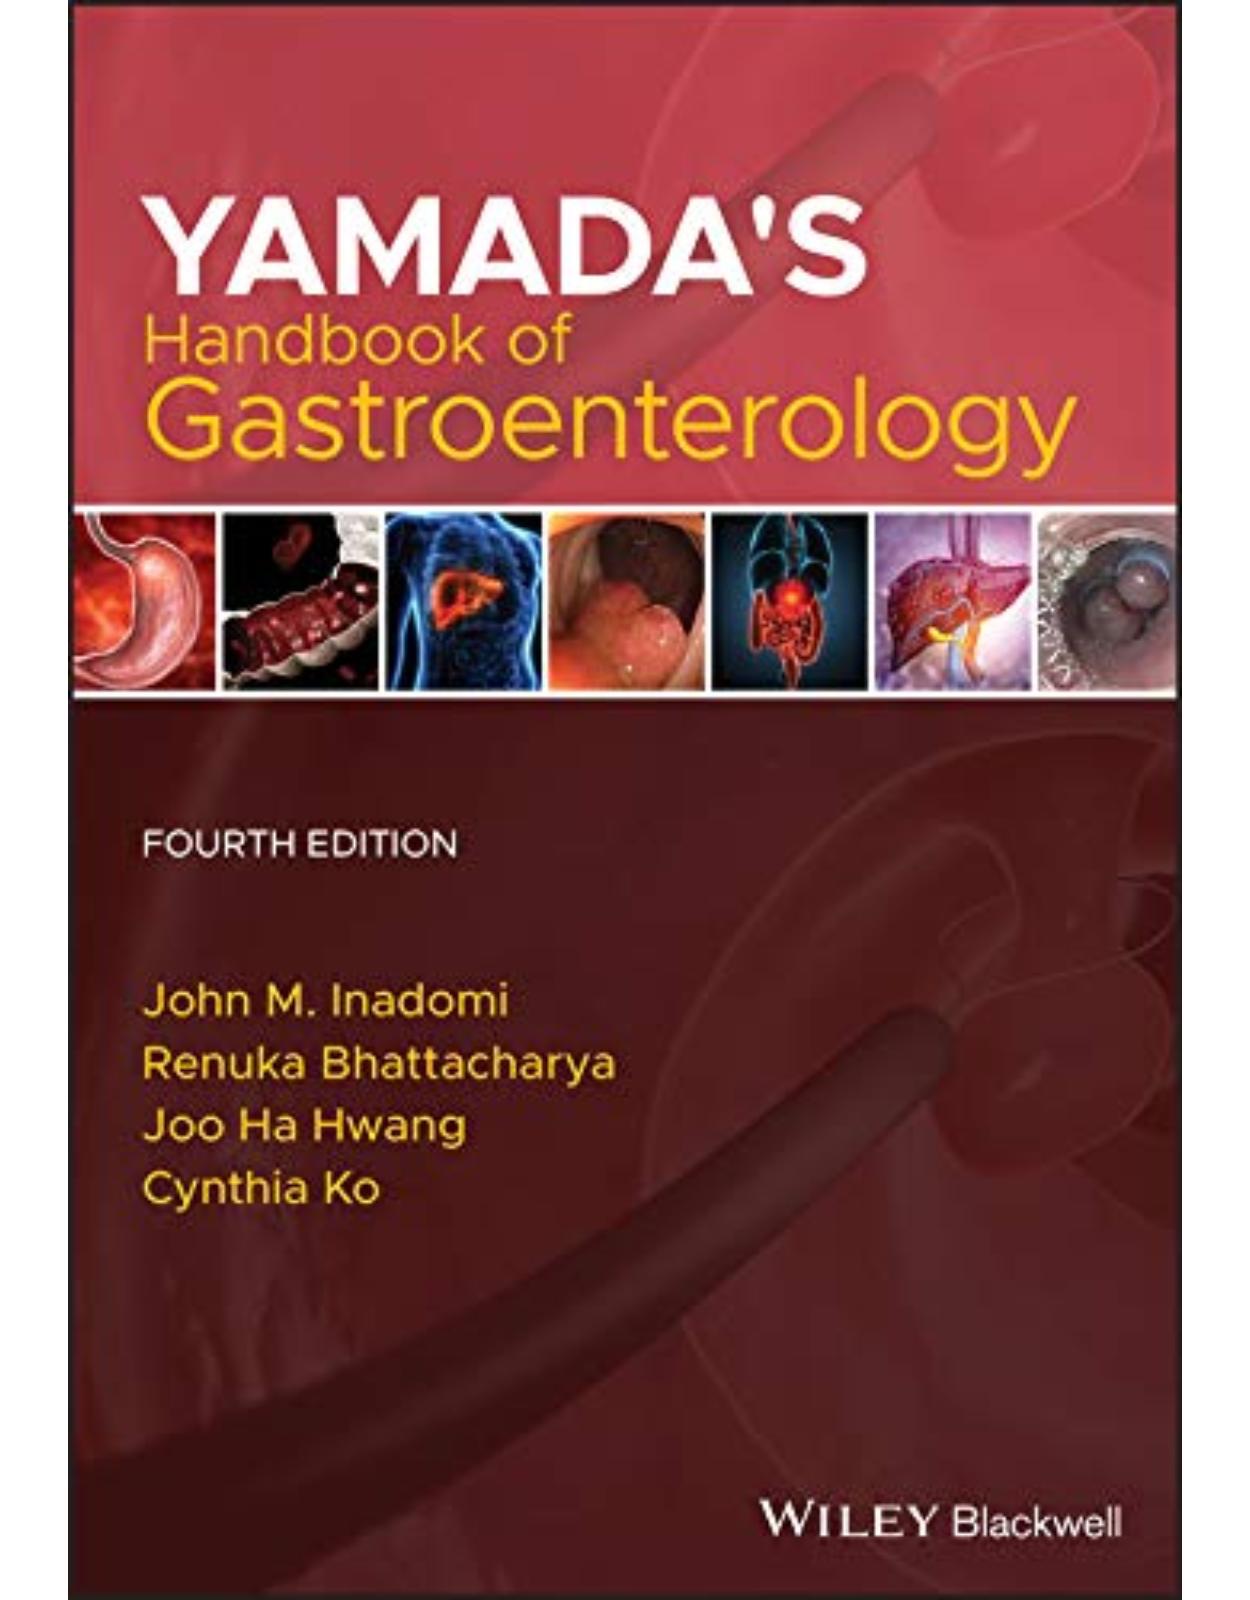 Yamada's Handbook of Gastroenterology, 4th Edition